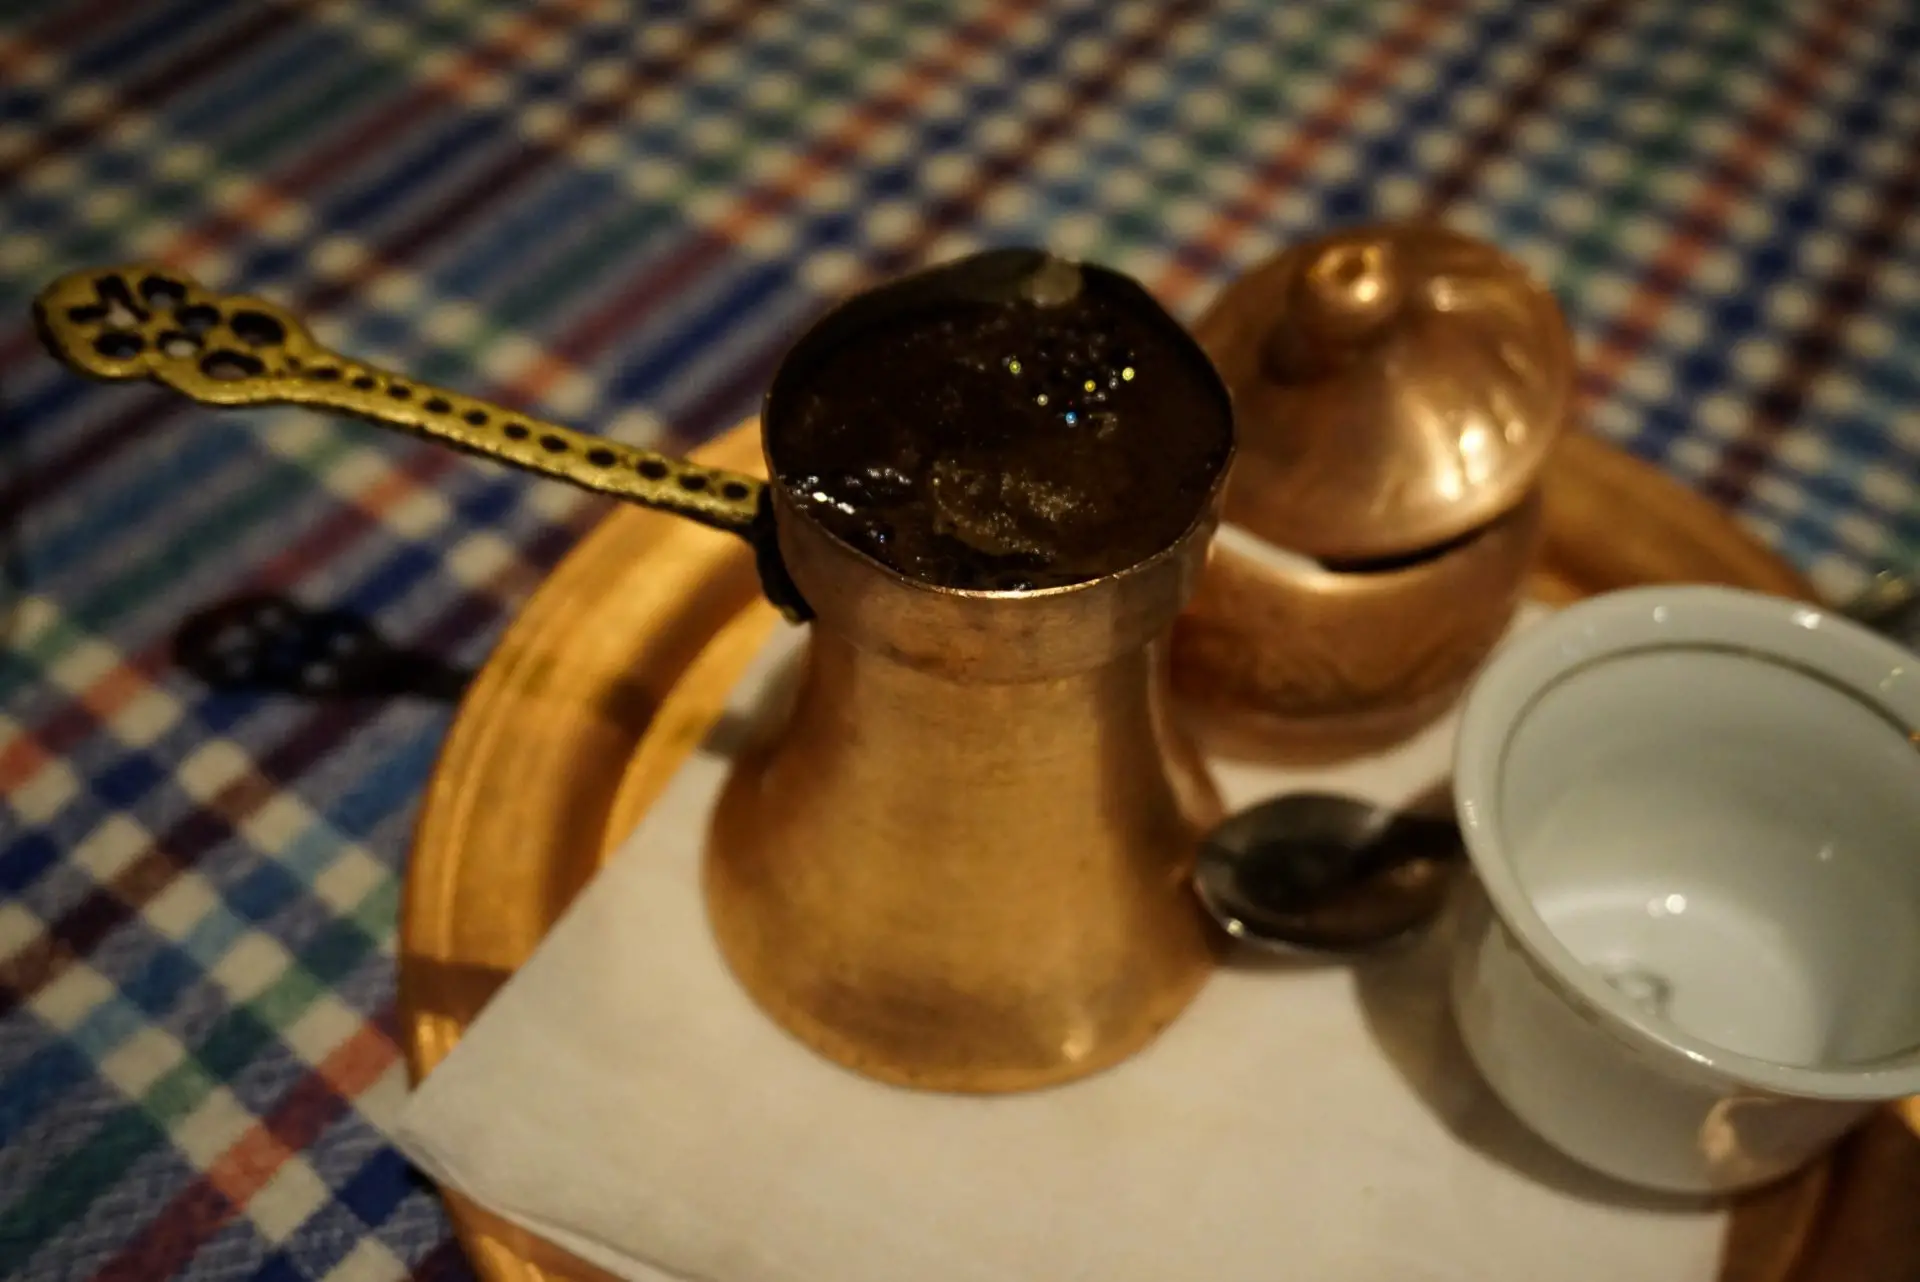 Bosnian coffee, Sarajevo, Bosnia and Herzegovina - Experiencing the Globe